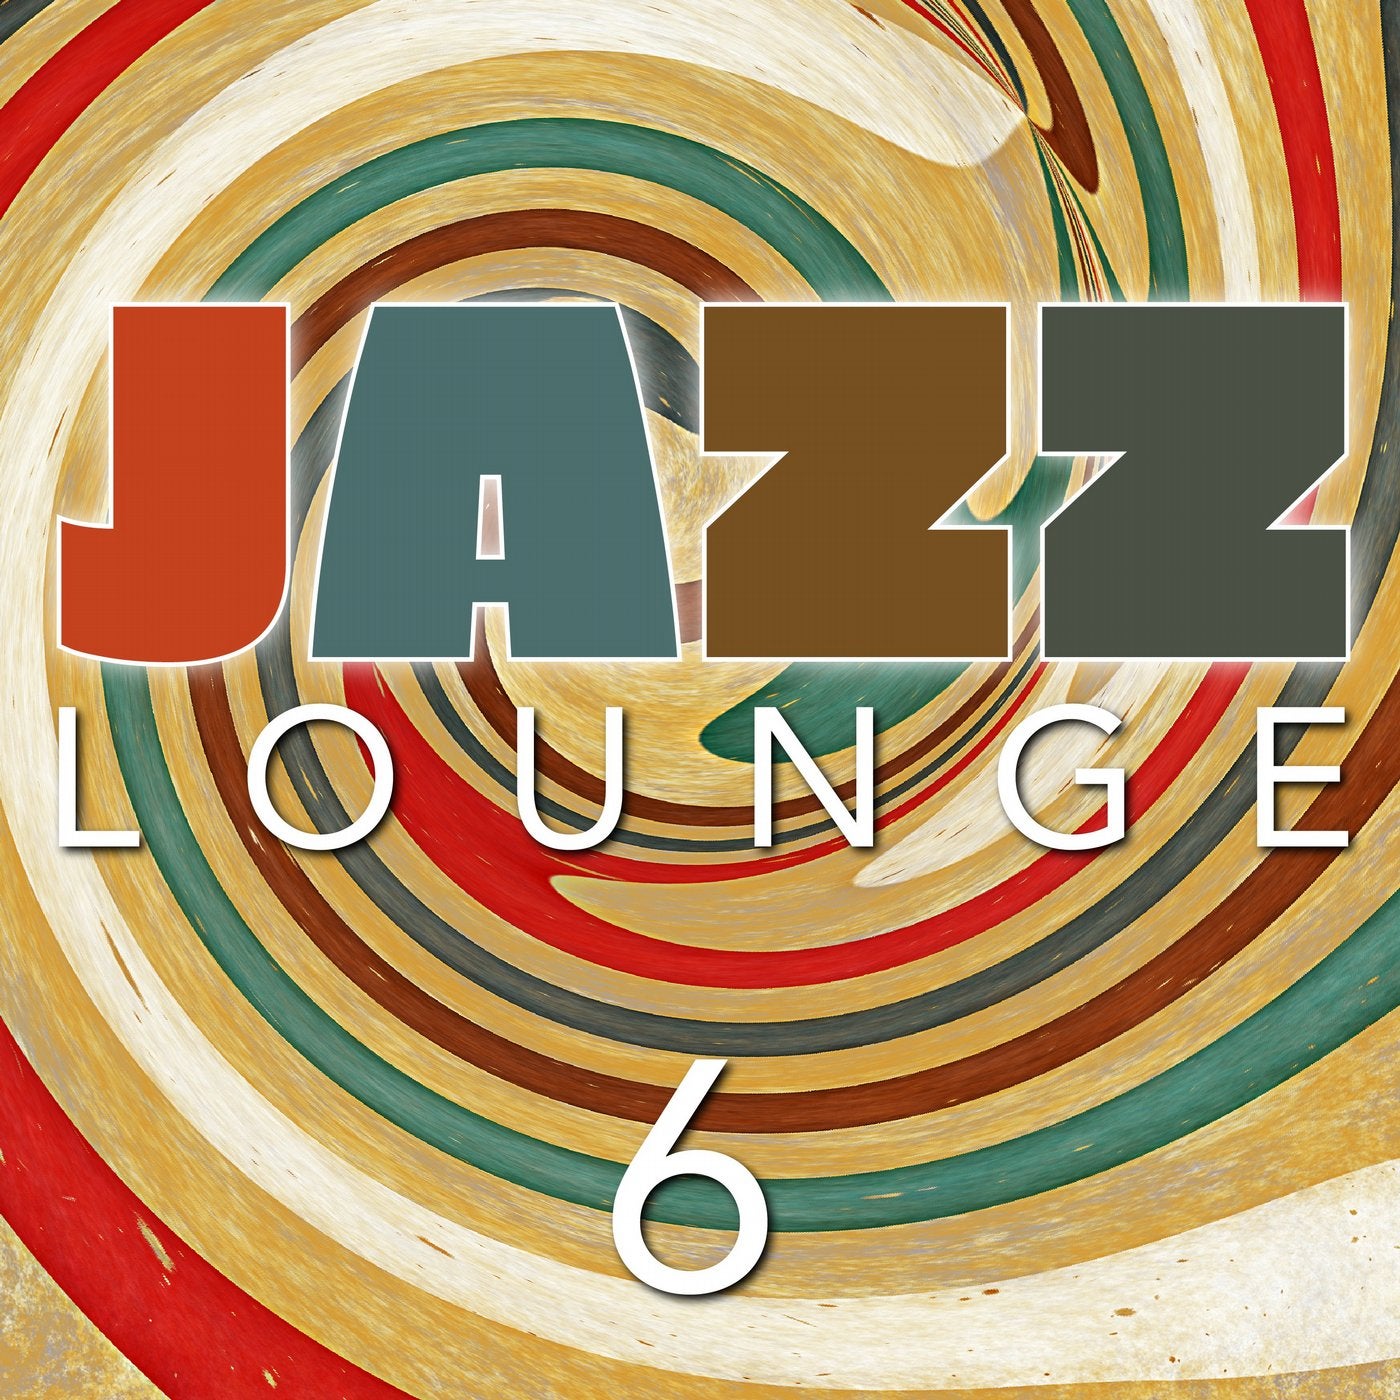 Jazz Lounge, Vol. 6